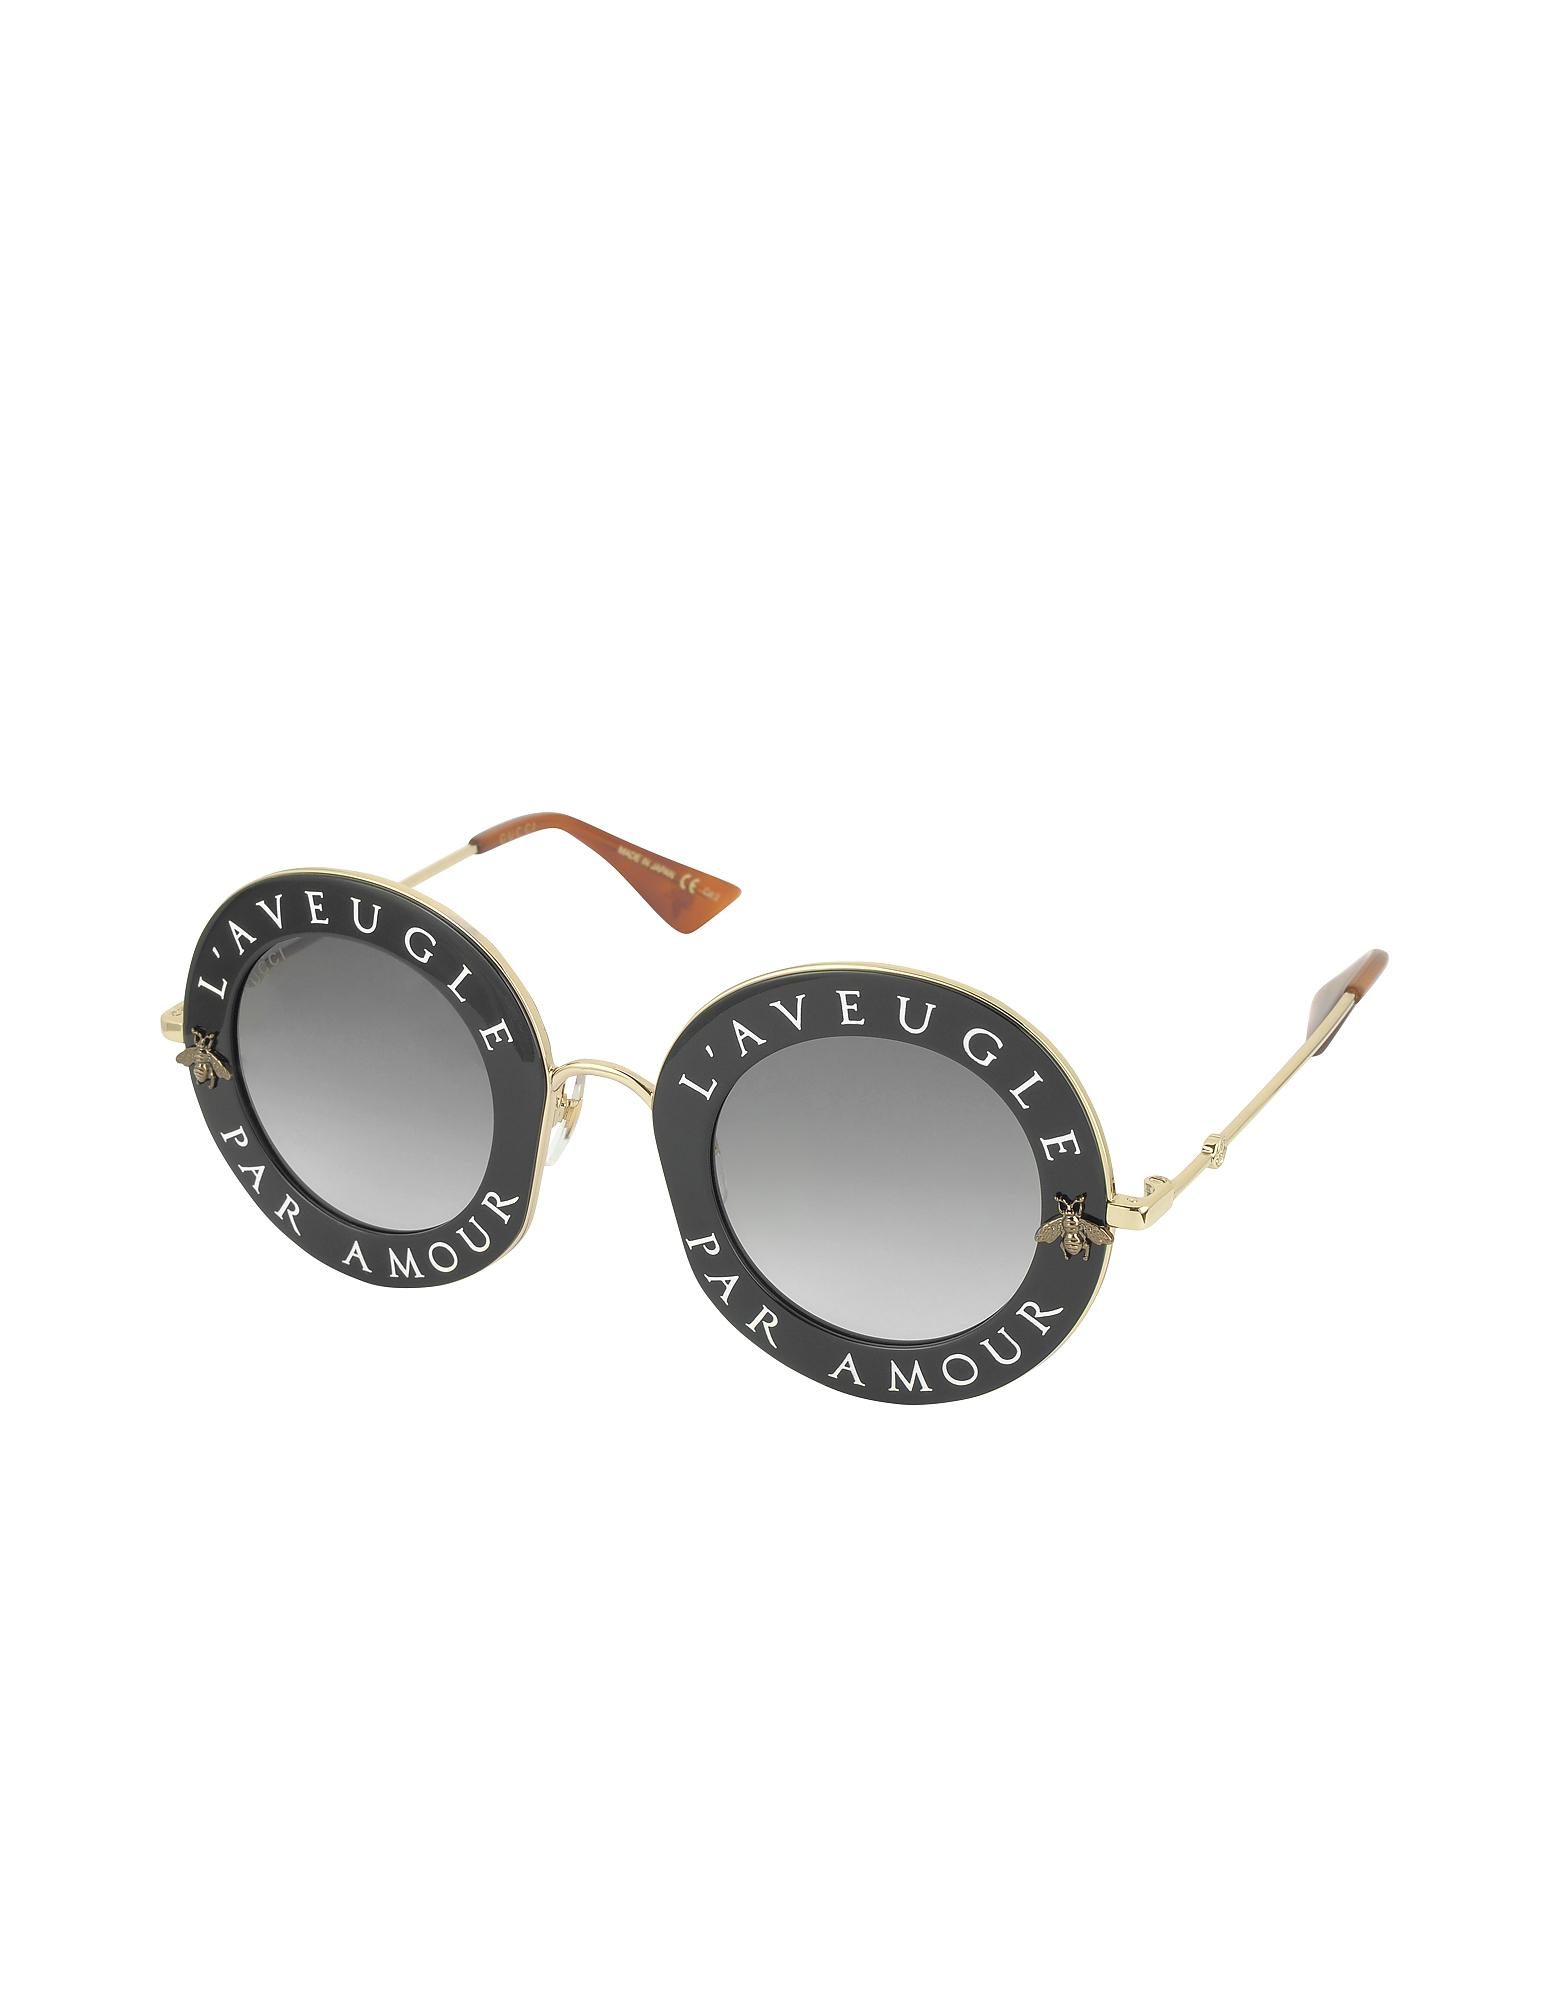 gucci round sunglasses womens